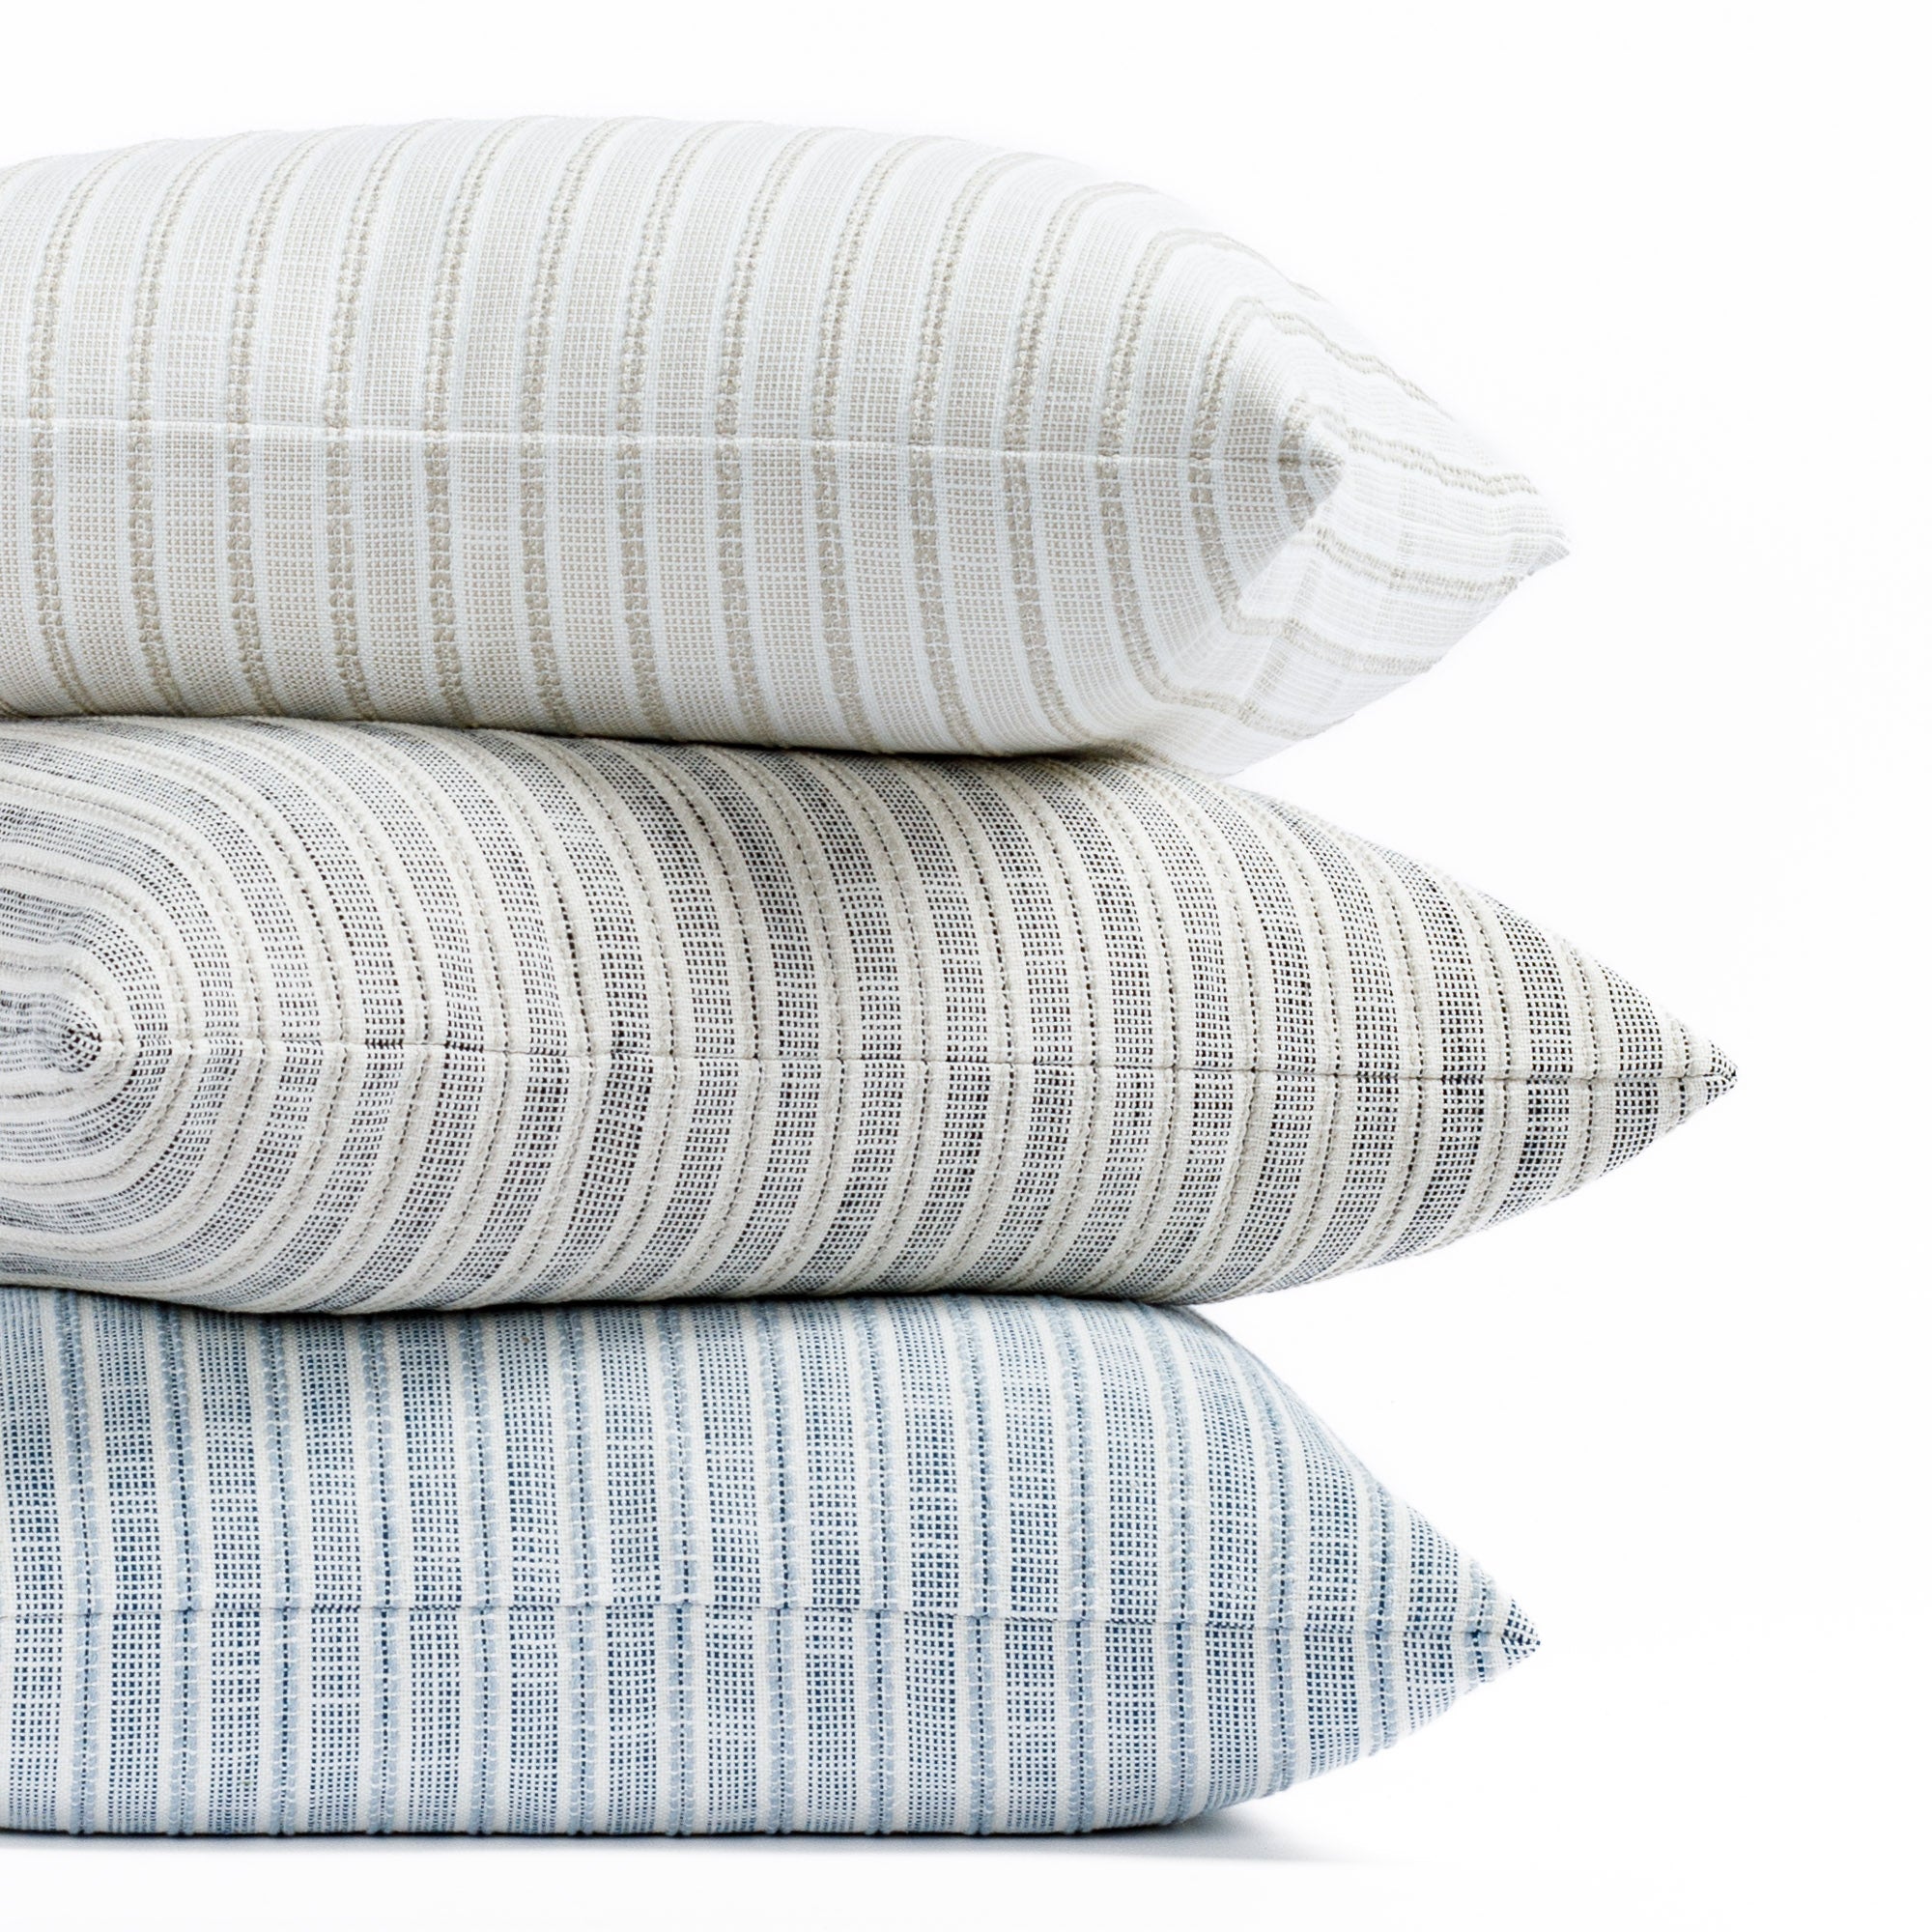 Amalfi stripe outdoor throw pillows in three colorways